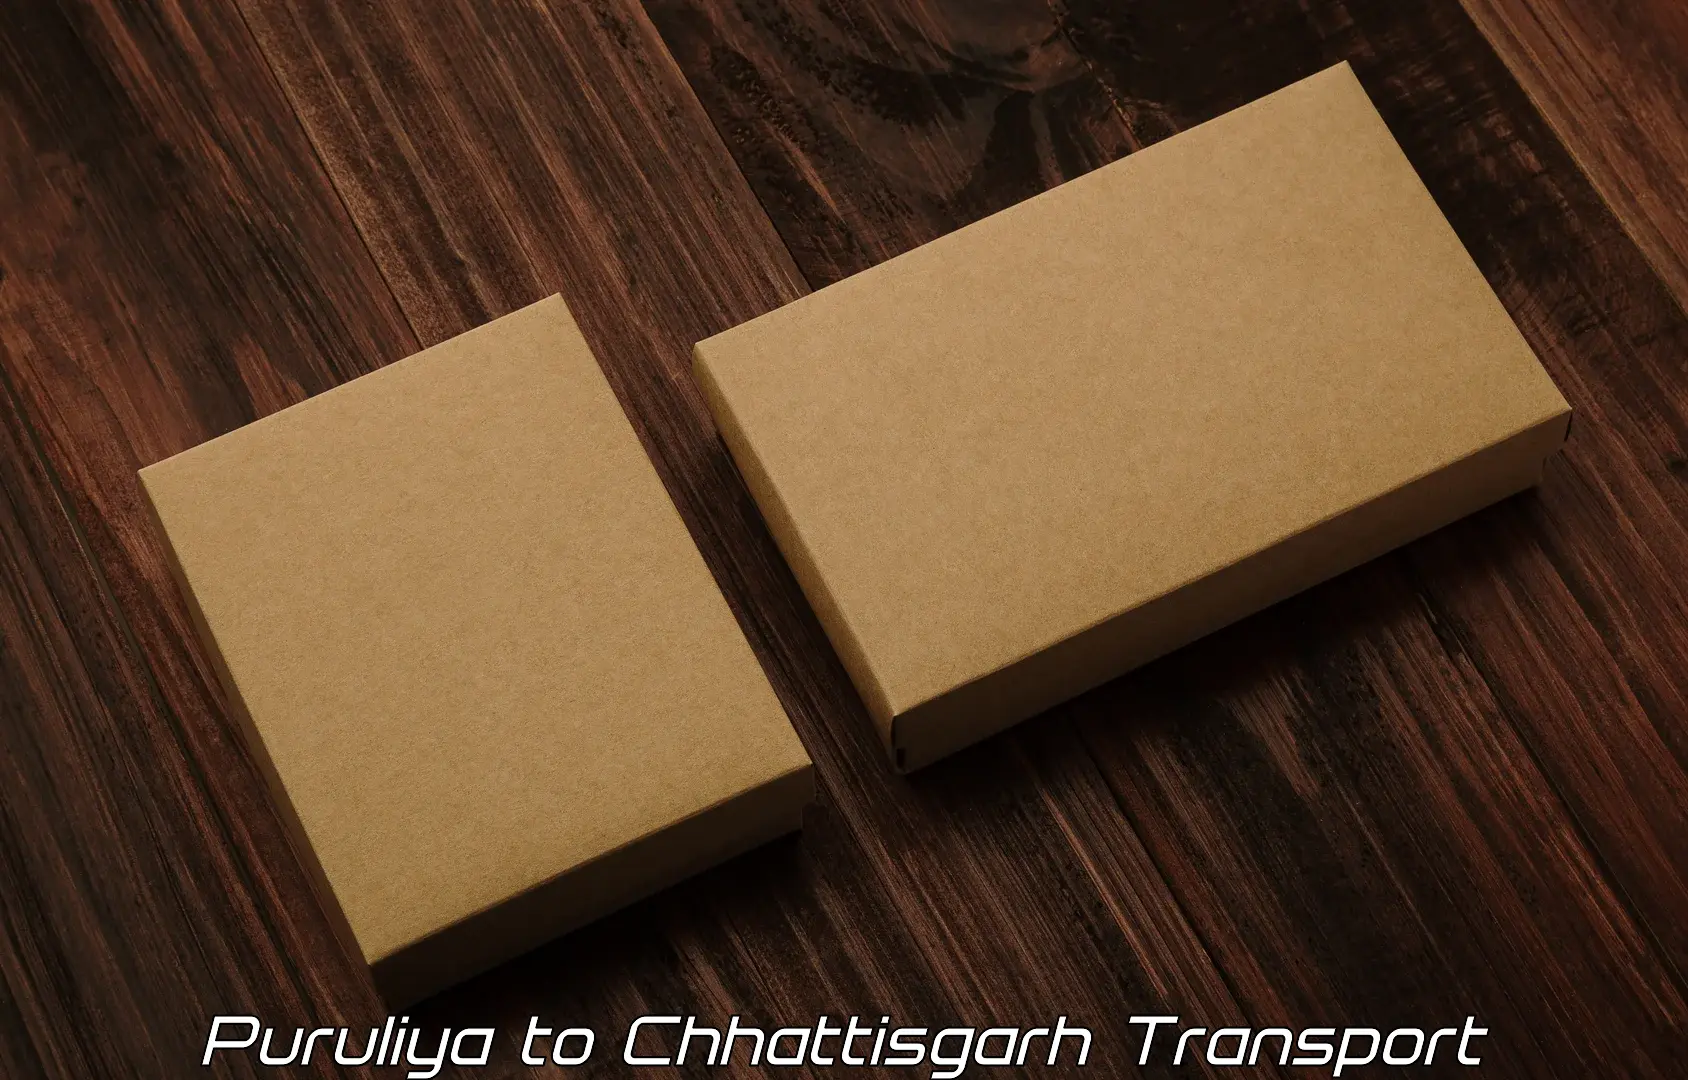 Truck transport companies in India Puruliya to Dongargarh